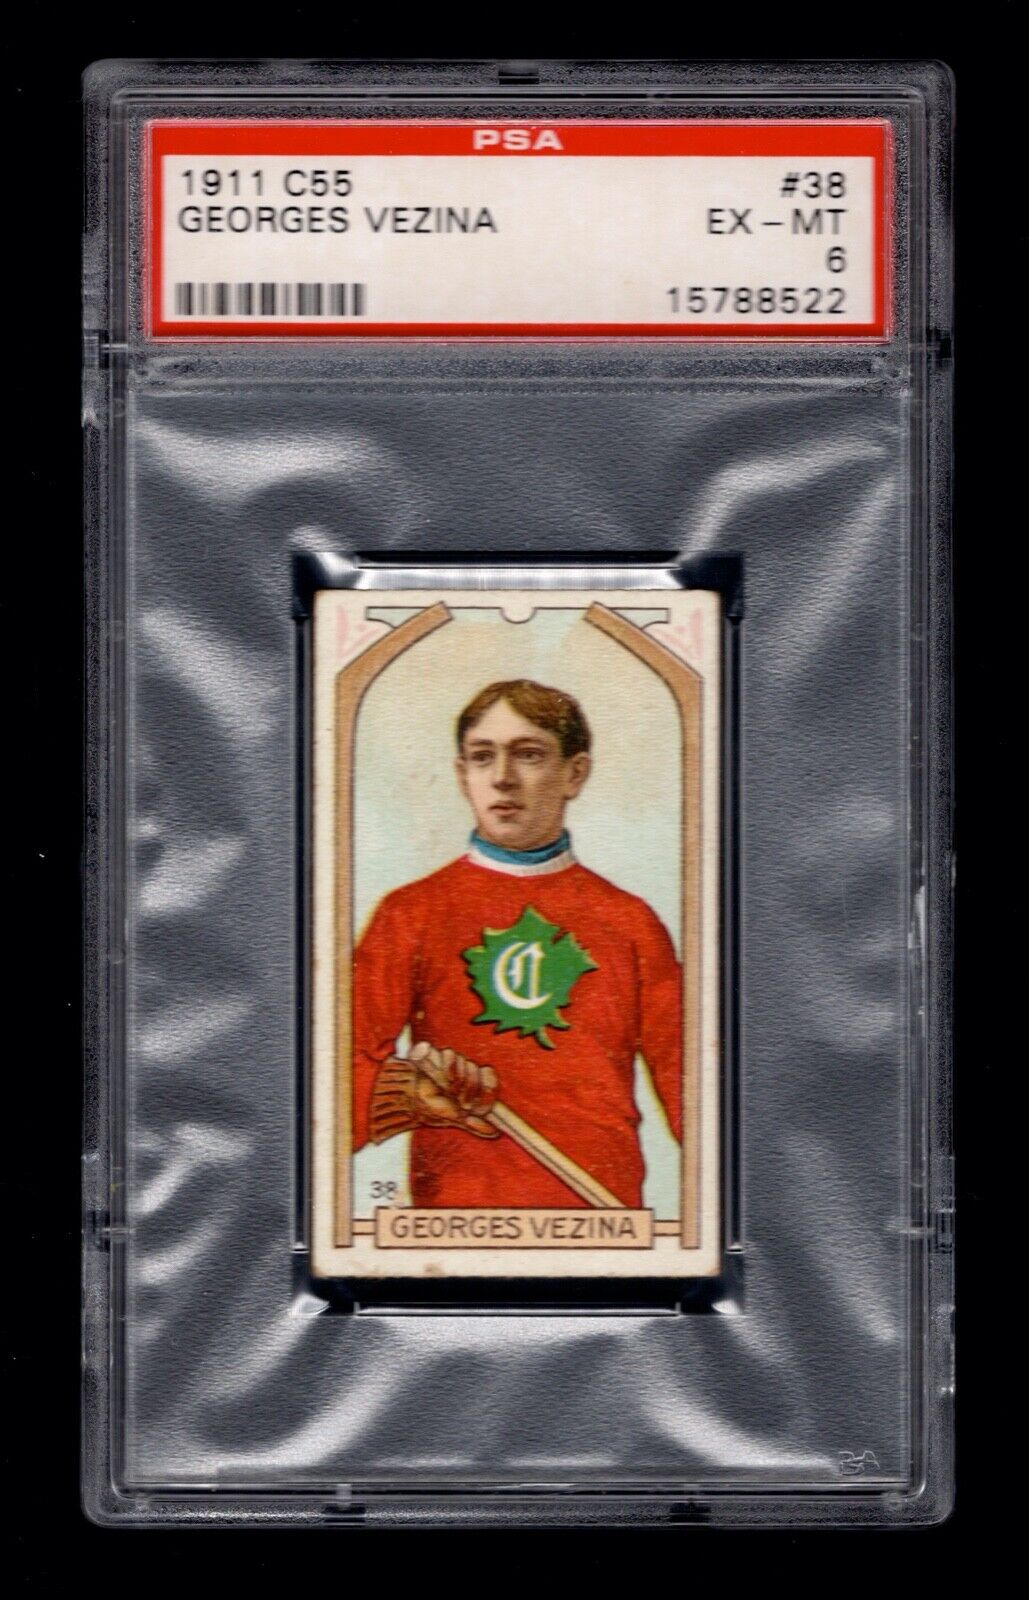 PSA 6 GEORGES VEZINA 1911 Imperial Tobacco C55 Hockey Card #38 ROOKIE, GRAIL